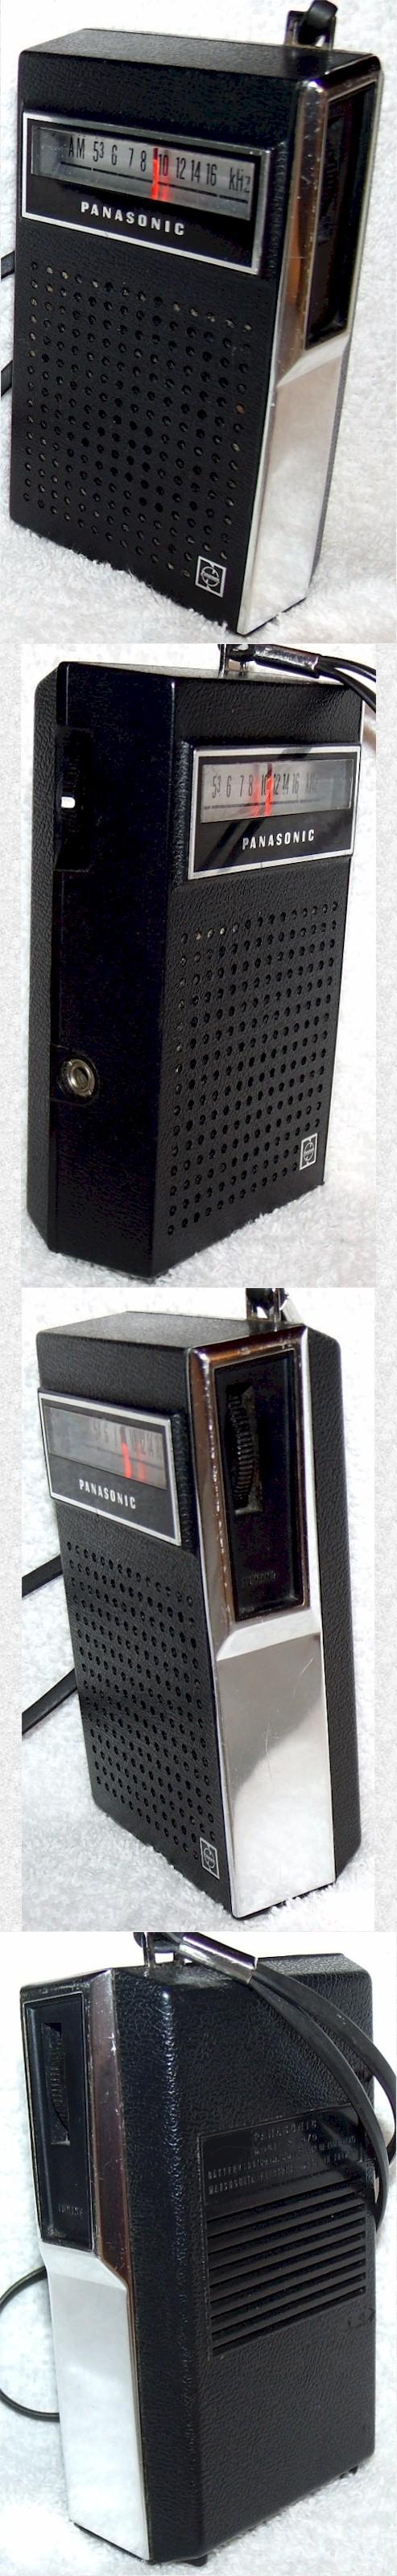 Panasonic R-1070 Pocket Transistor (1965)